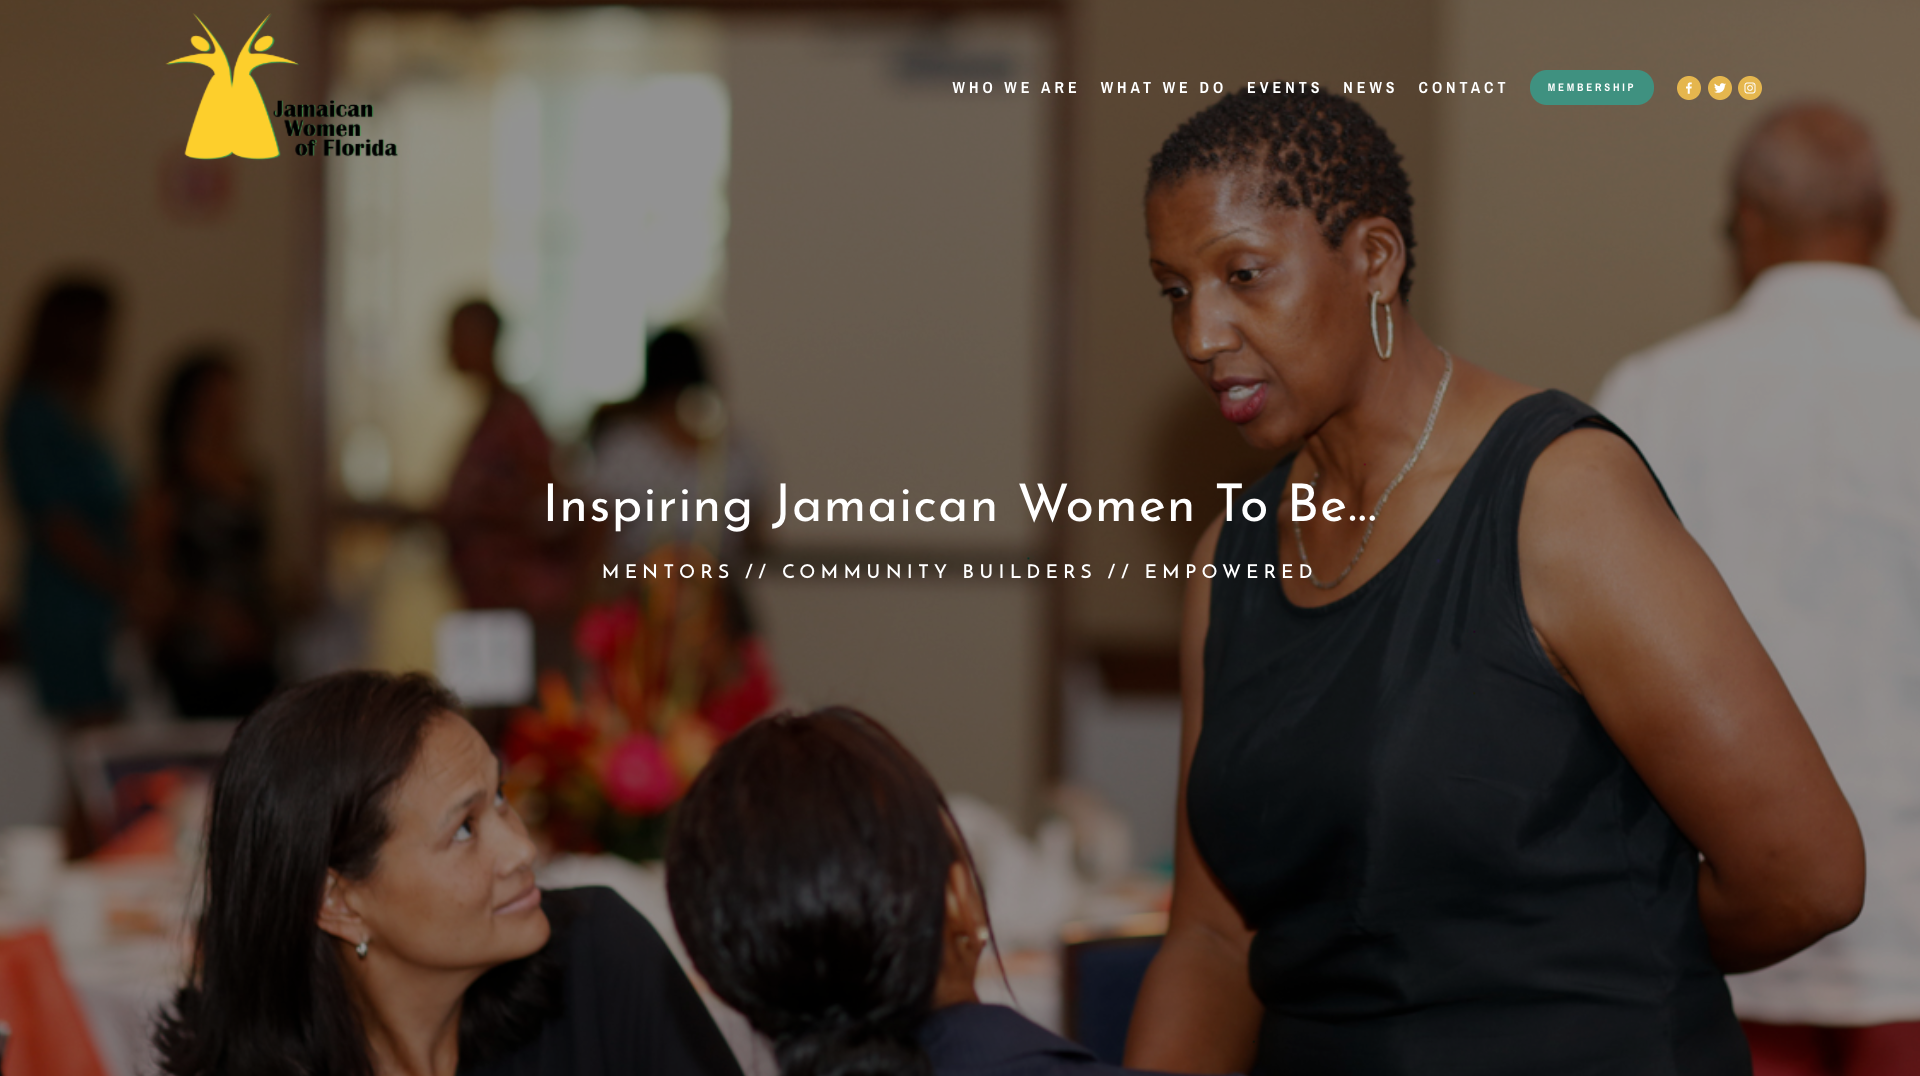 JAMAICAN WOMEN OF FLORIDA